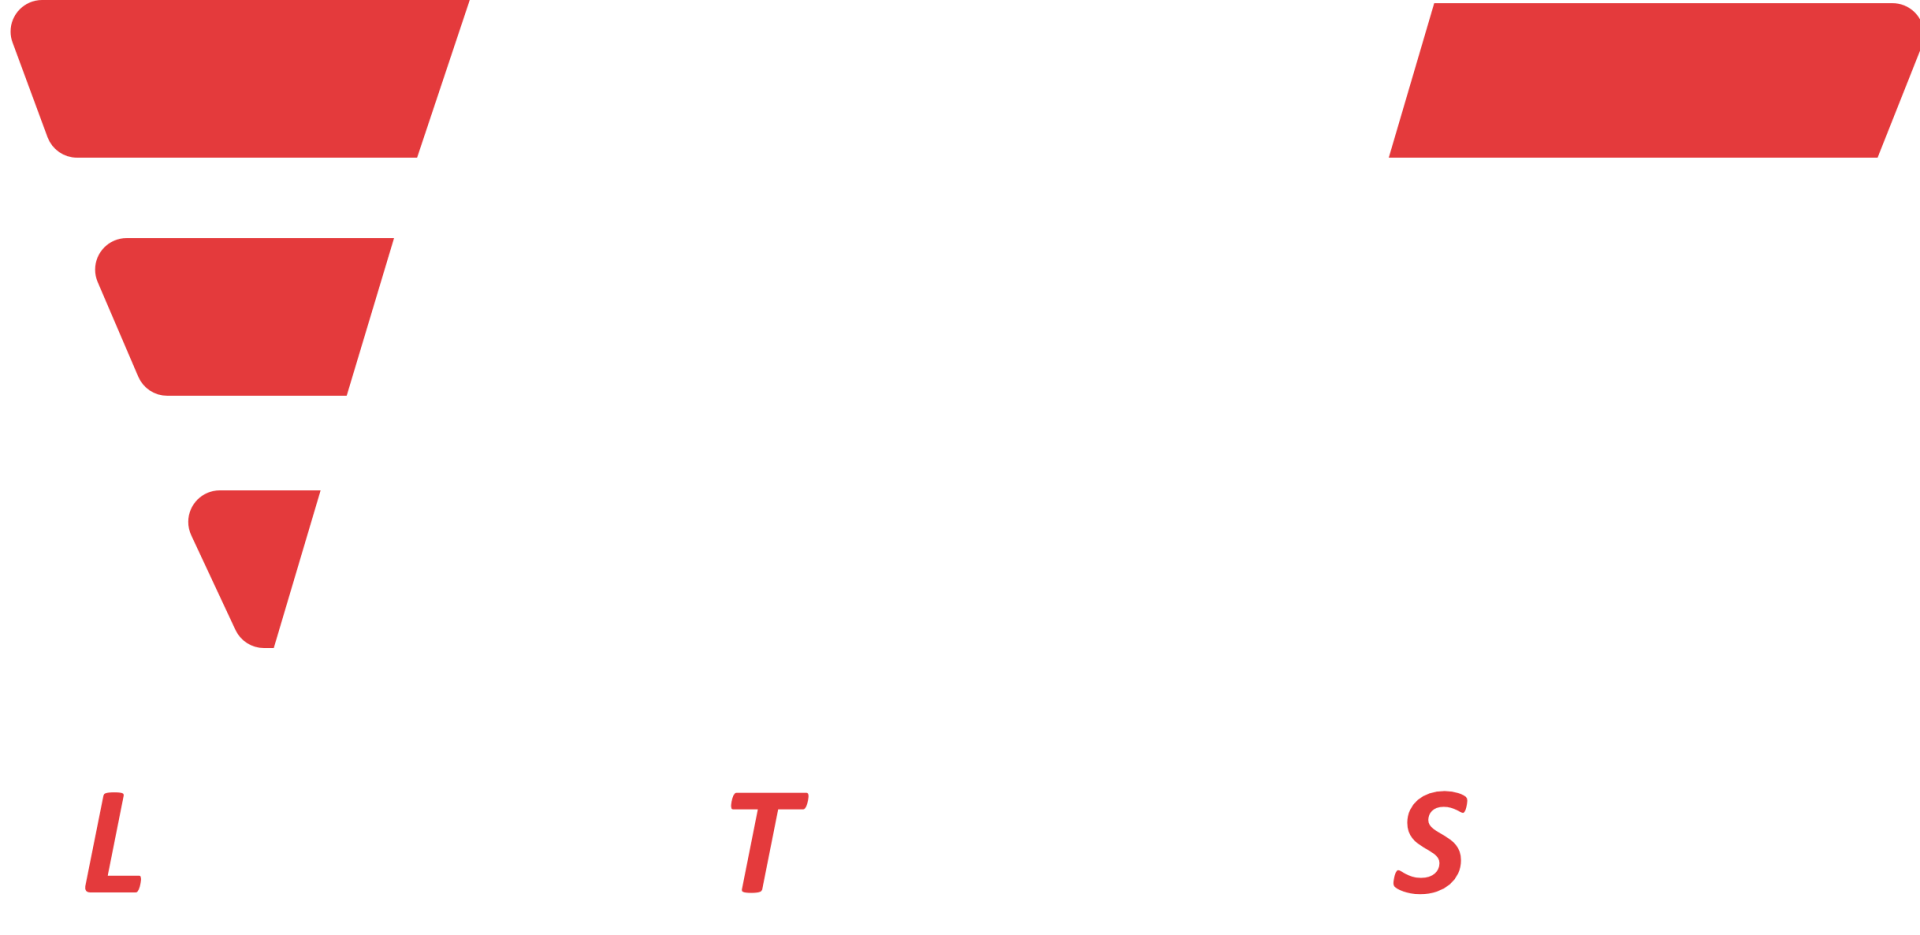 Lehmann Transport Service